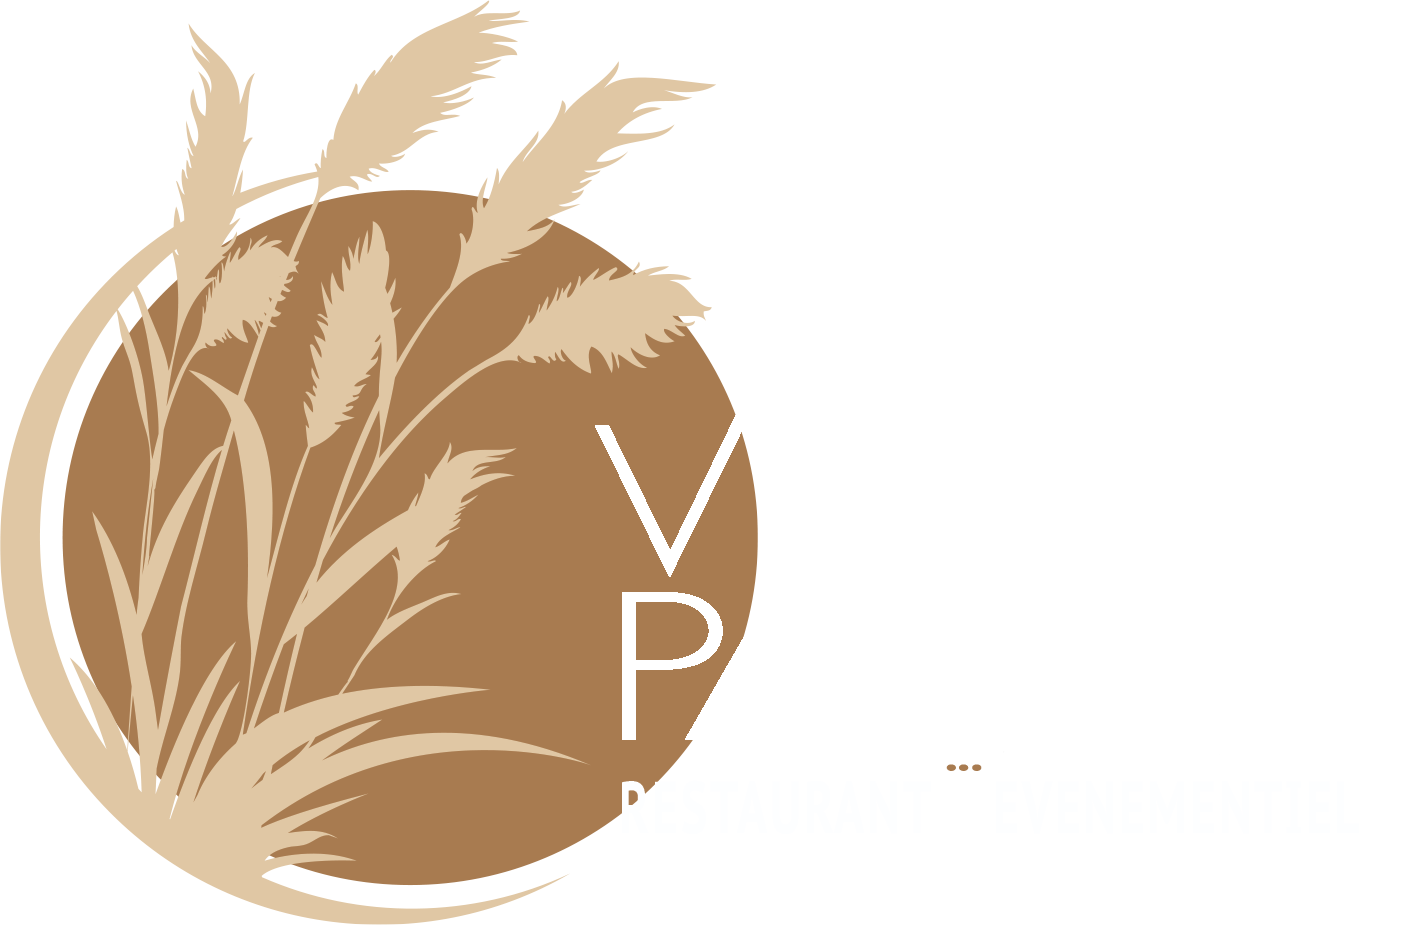 Logo Villa Pampa